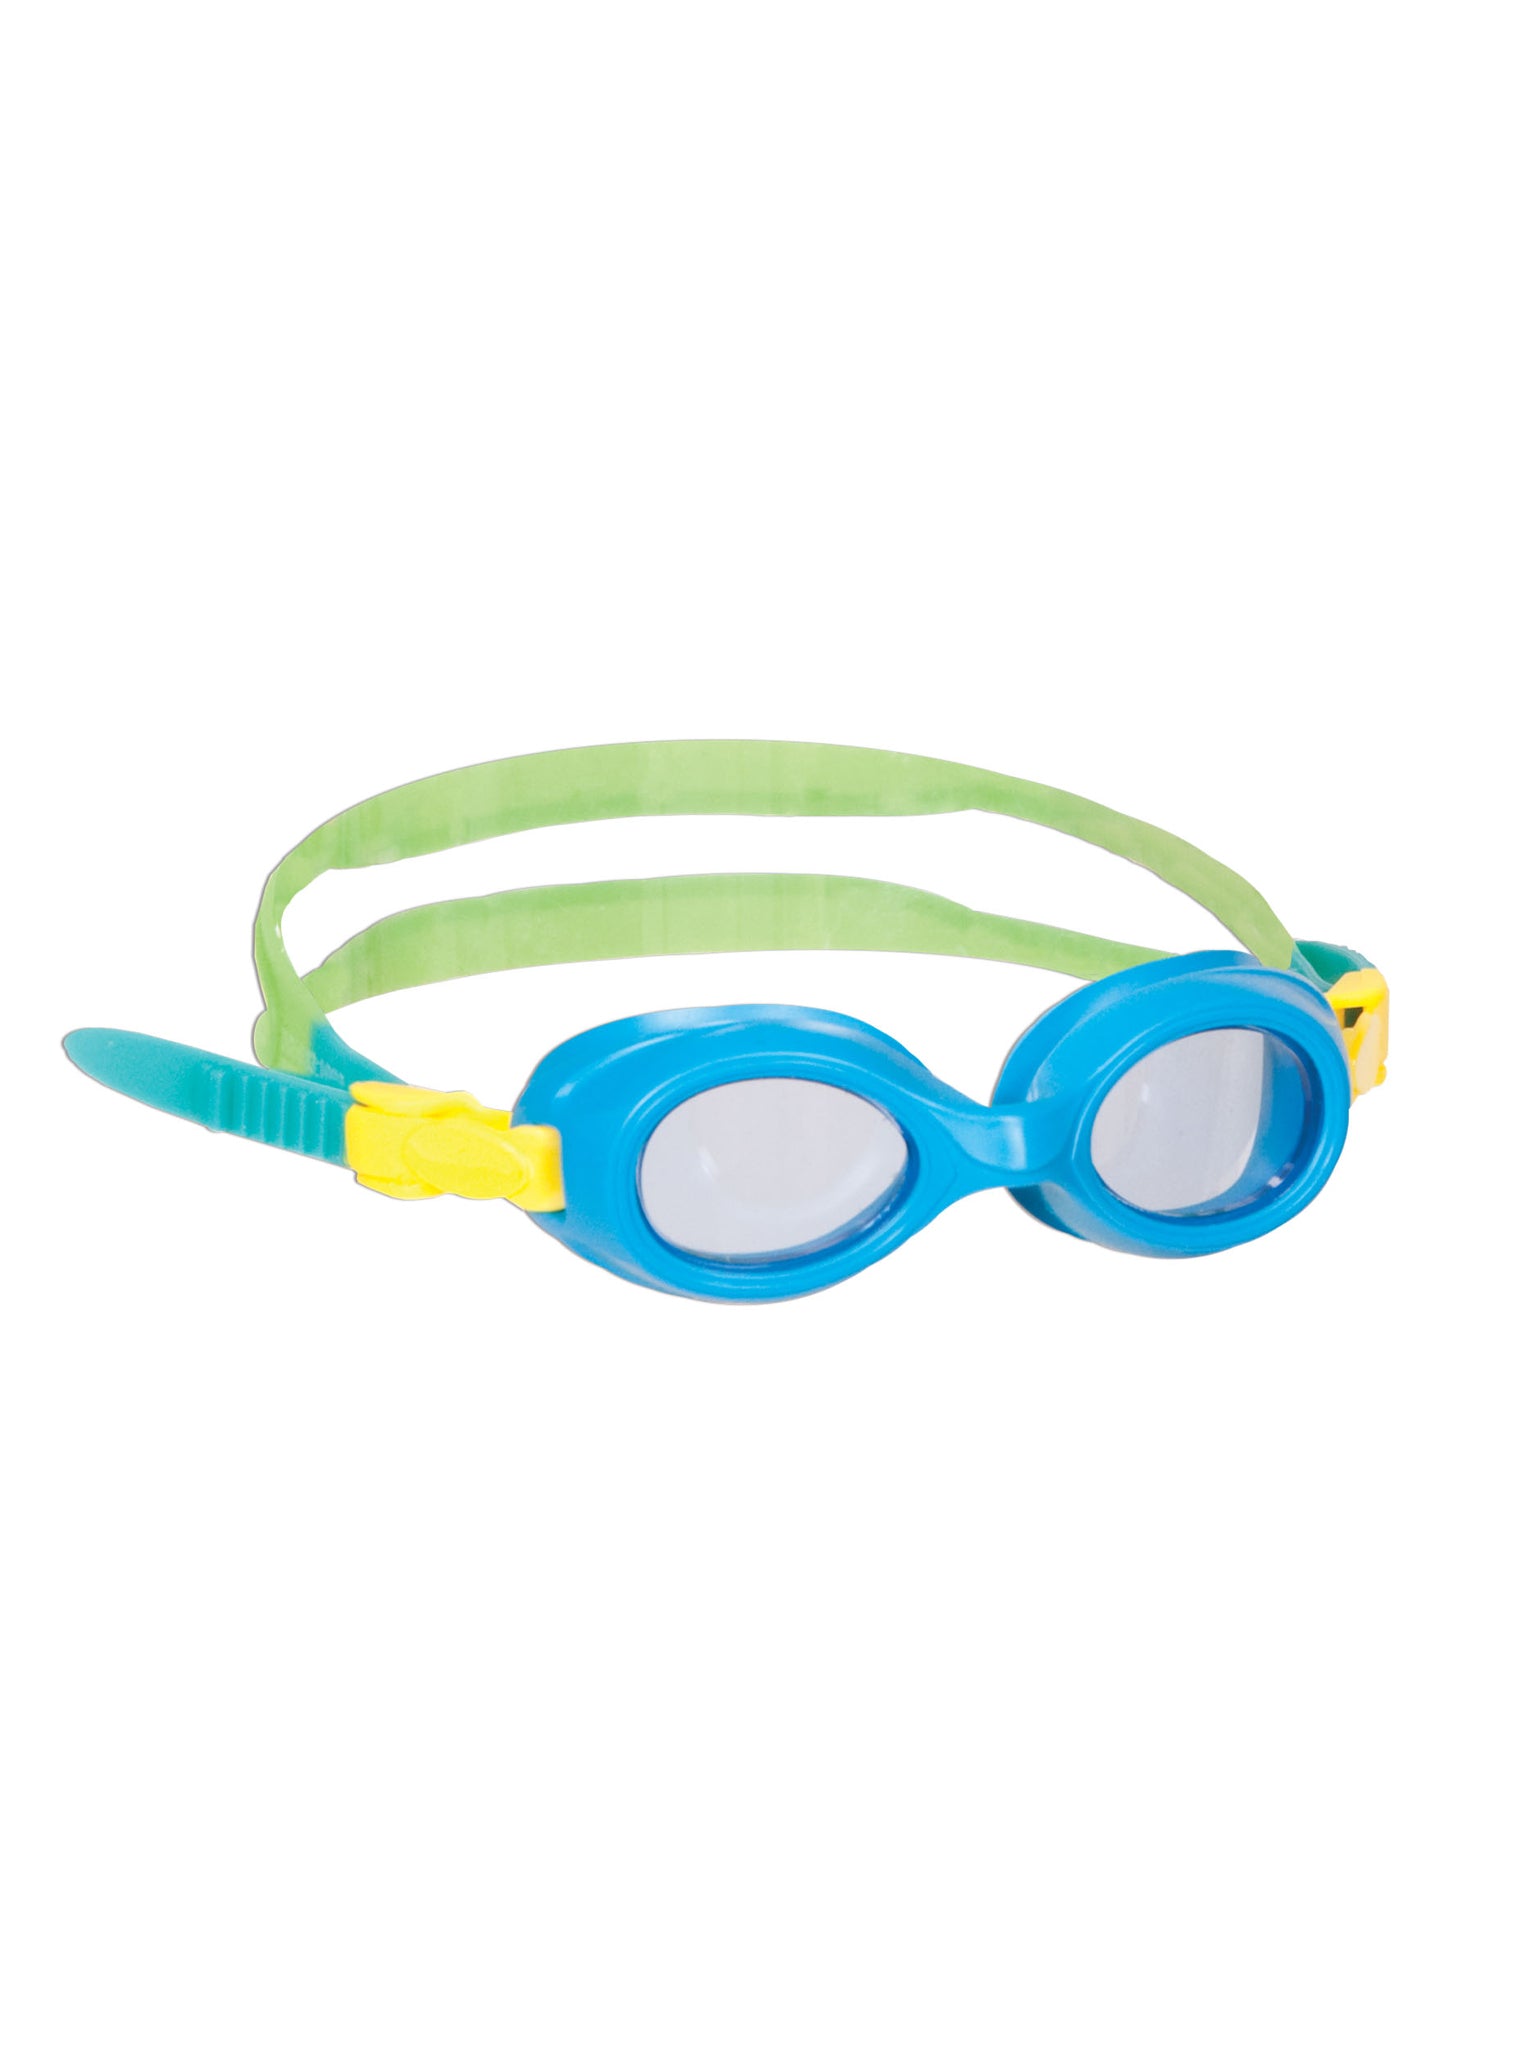 Jelly Bean Swim Goggle